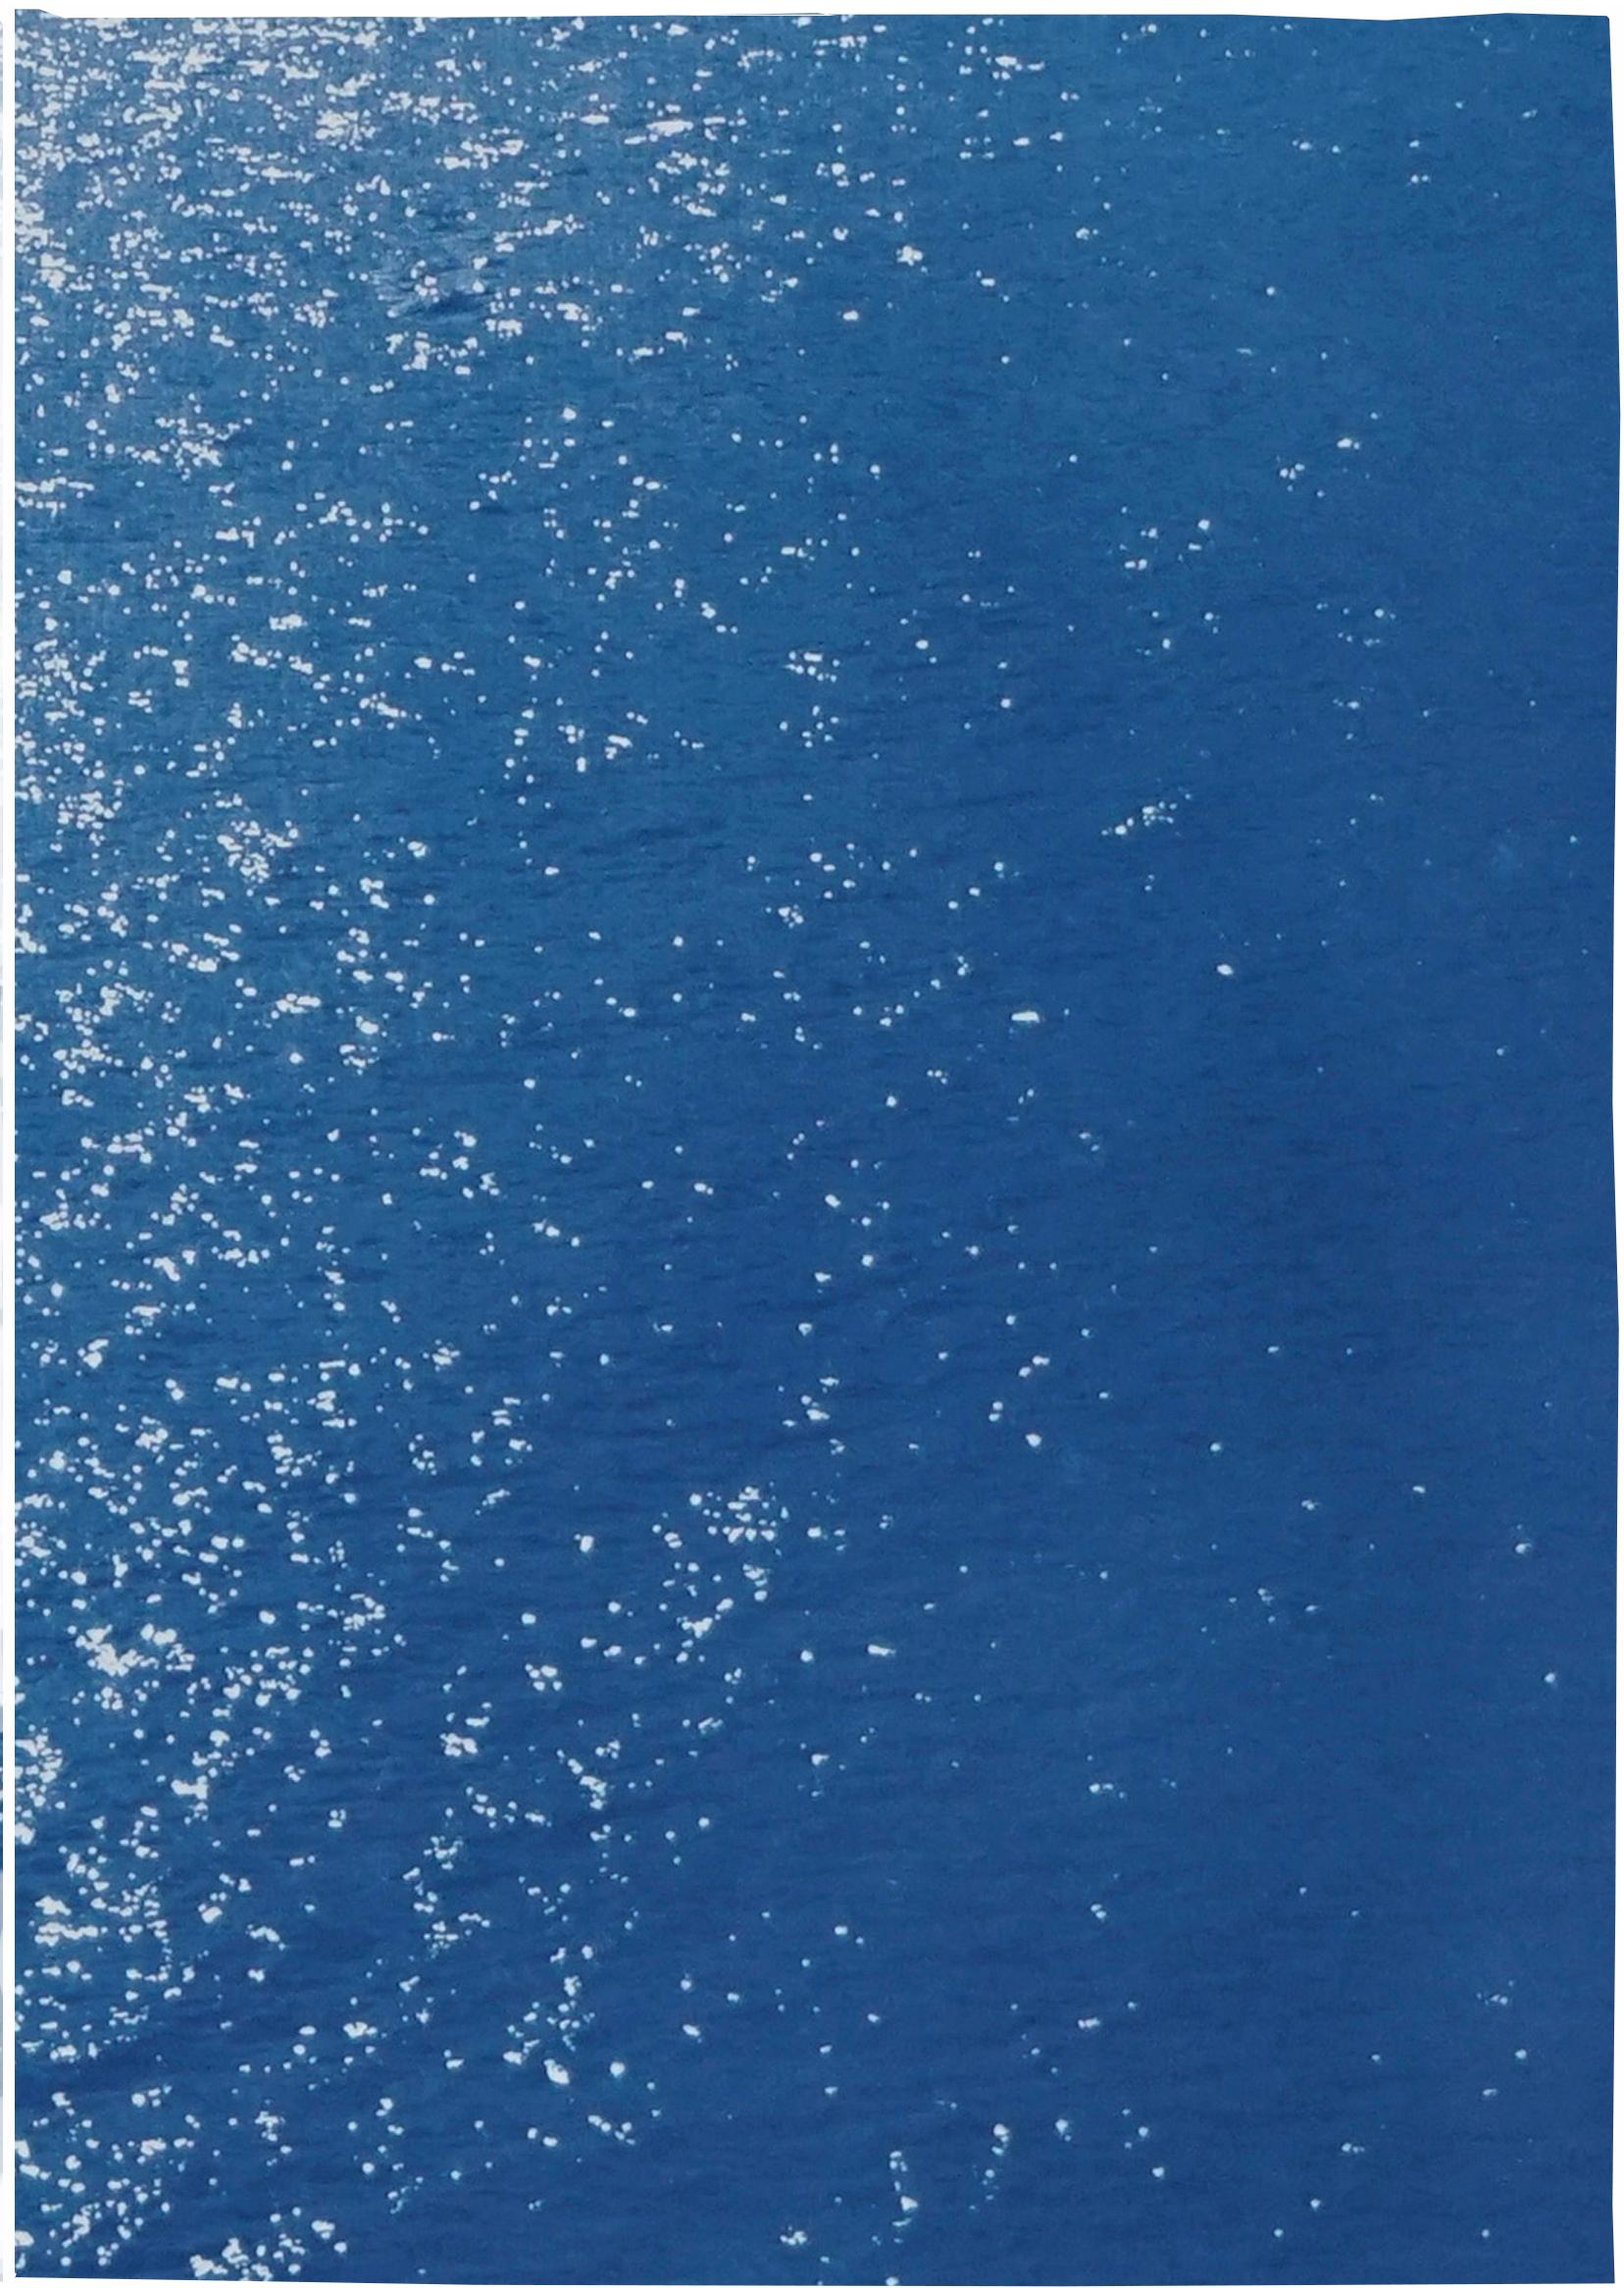 Splendorous Amalfi Coast Seascape , Colossal Cyanotype Triptych on Paper, 2020 - Blue Abstract Print by Kind of Cyan